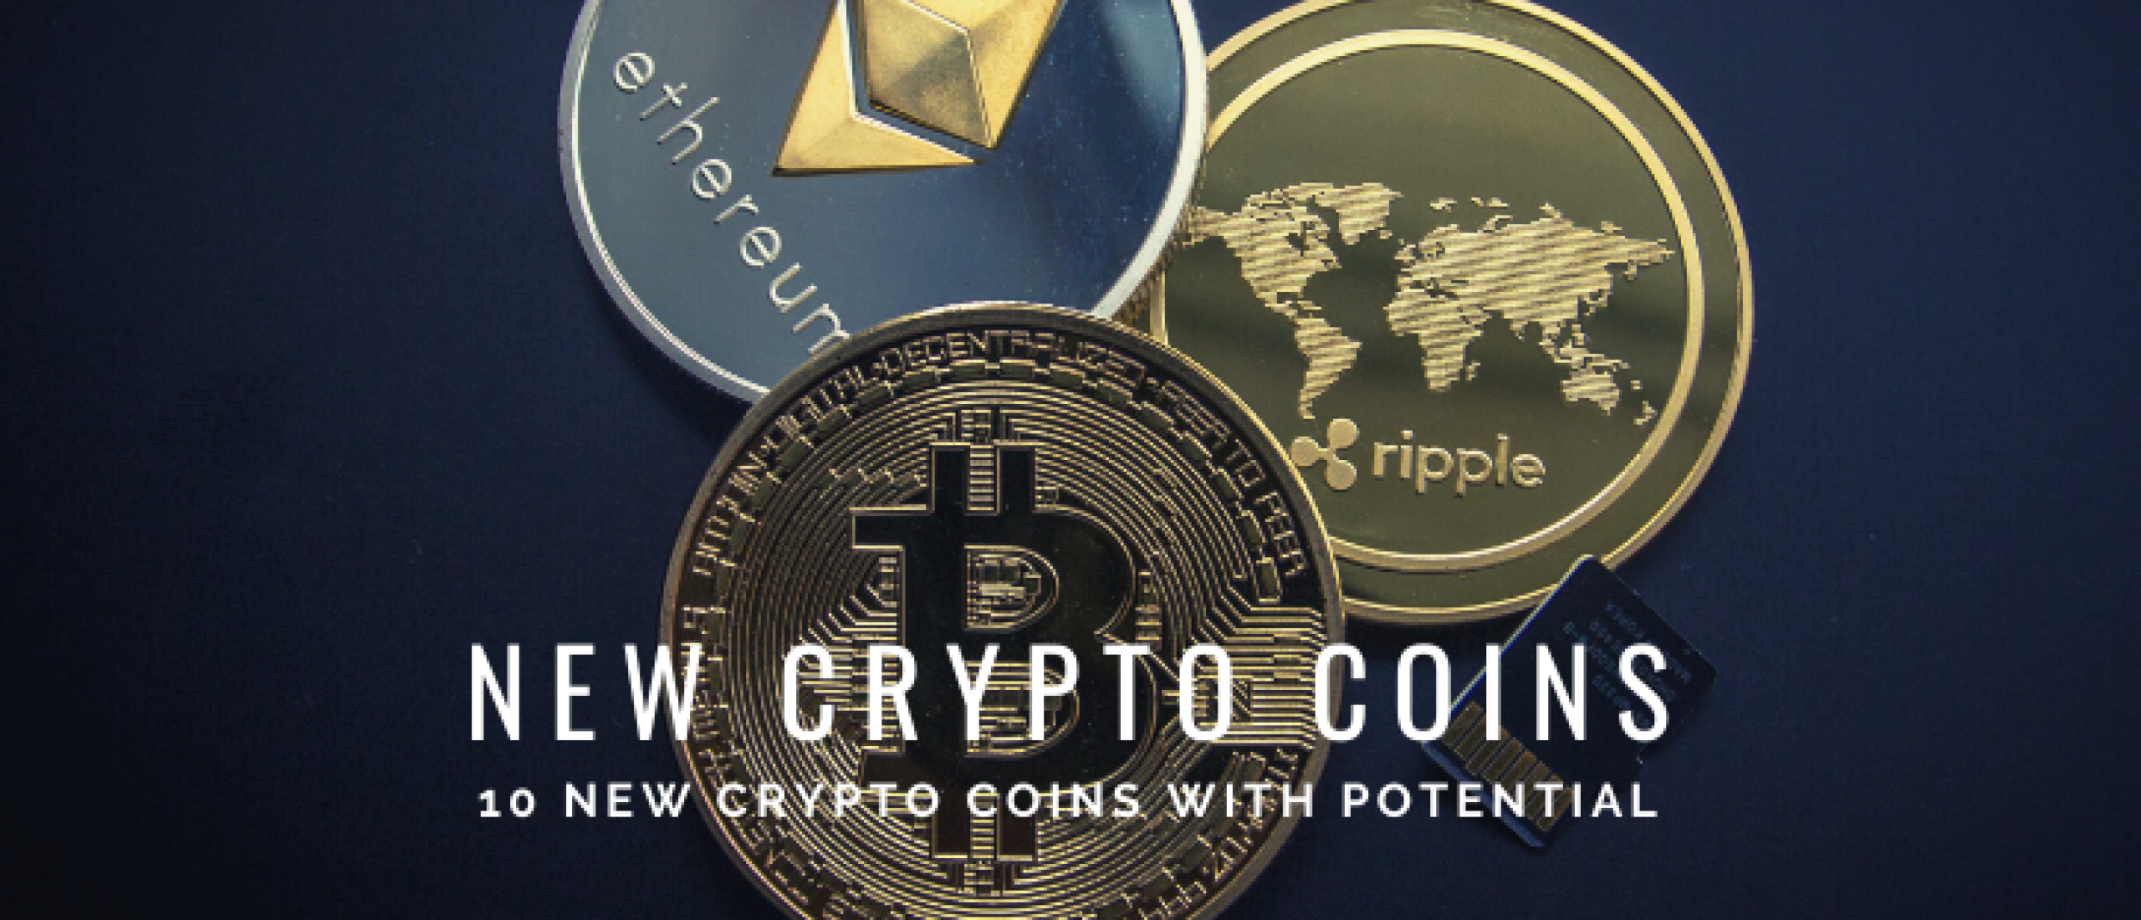 new crypto coins may 2018